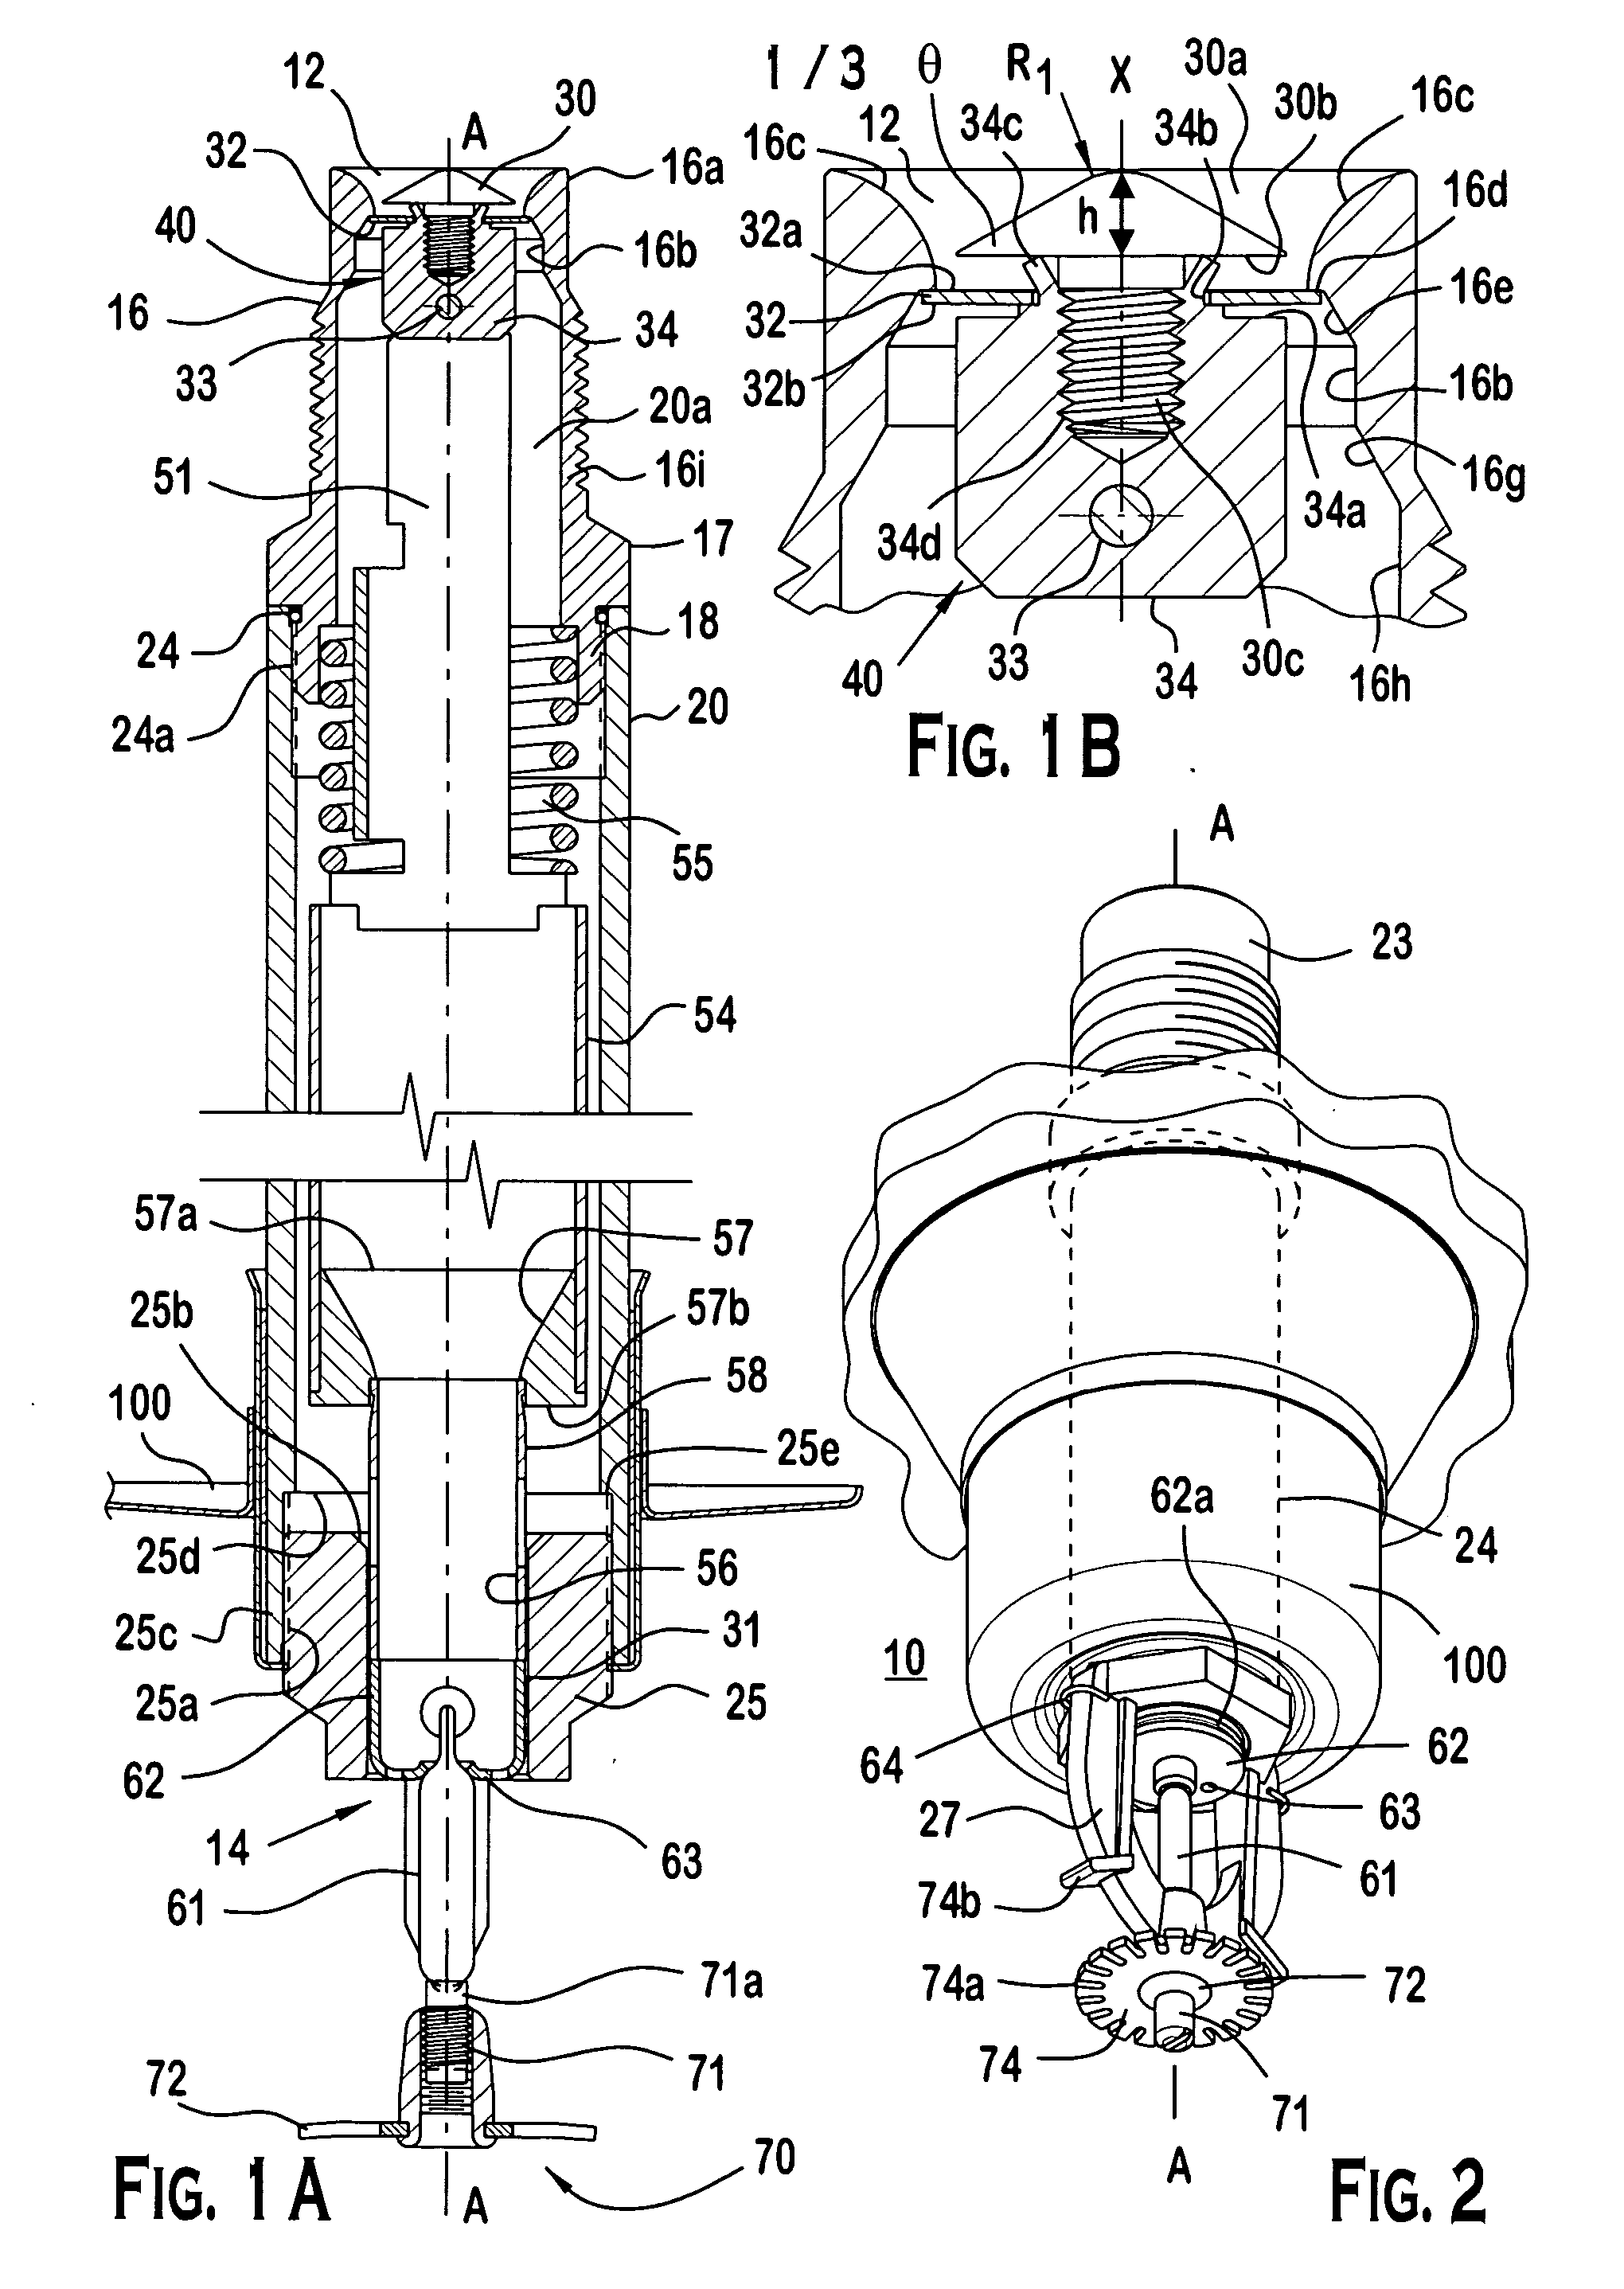 Dry sprinkler with a diverter seal assembly